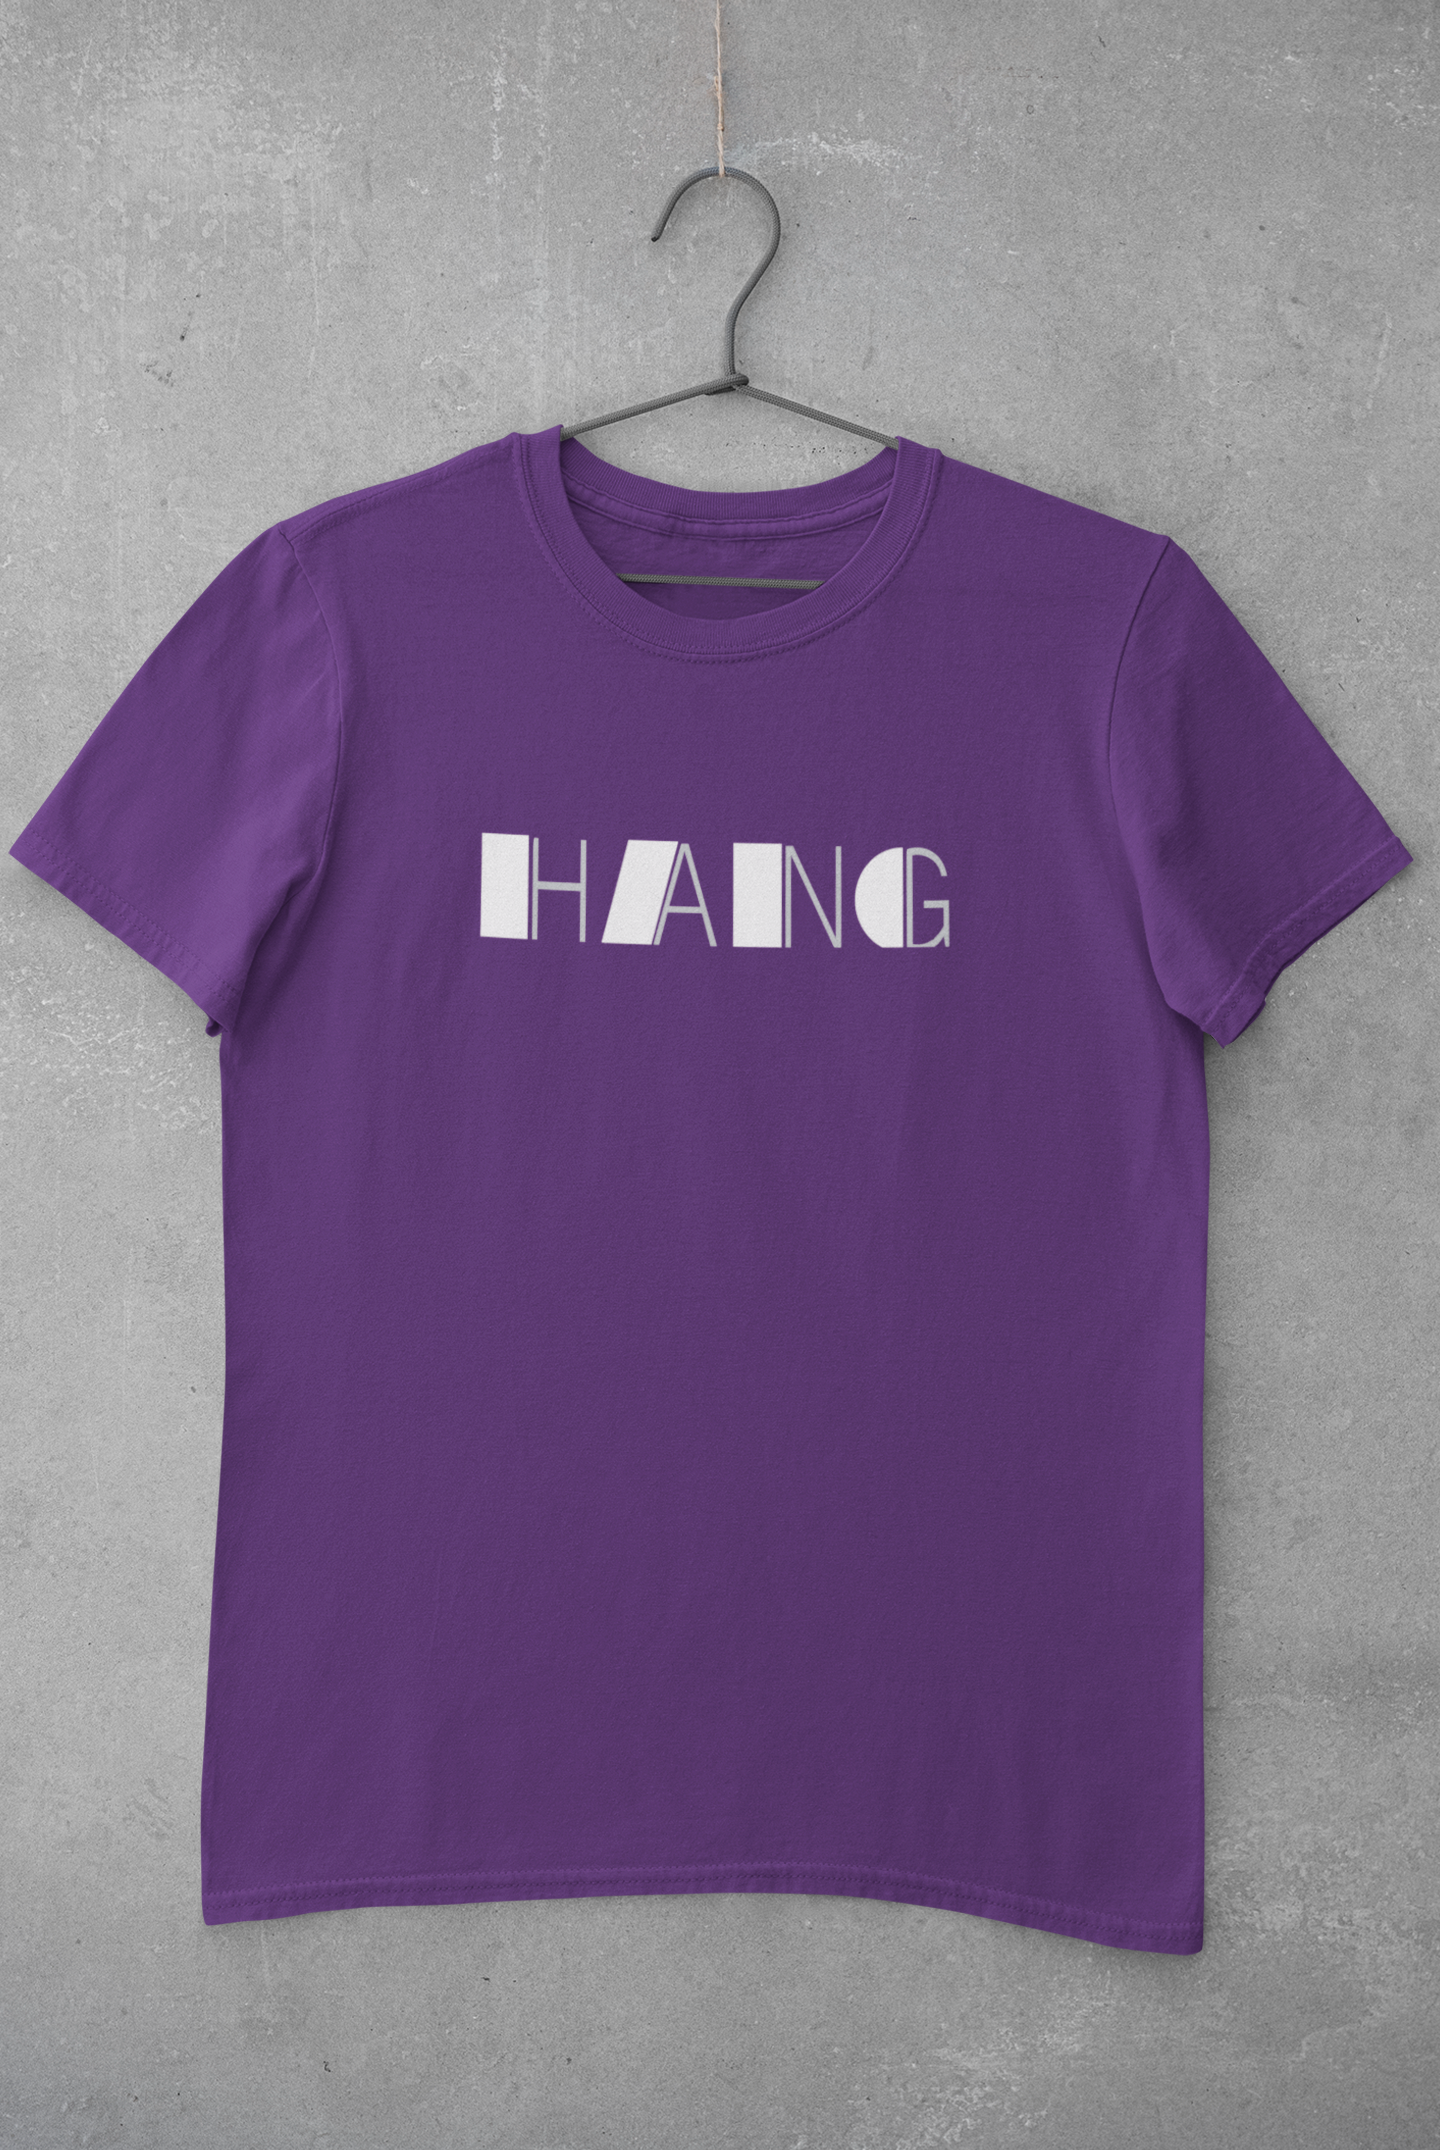 Hang Olivia Wilde Celebrity T-shirt- FunkyTeesClub